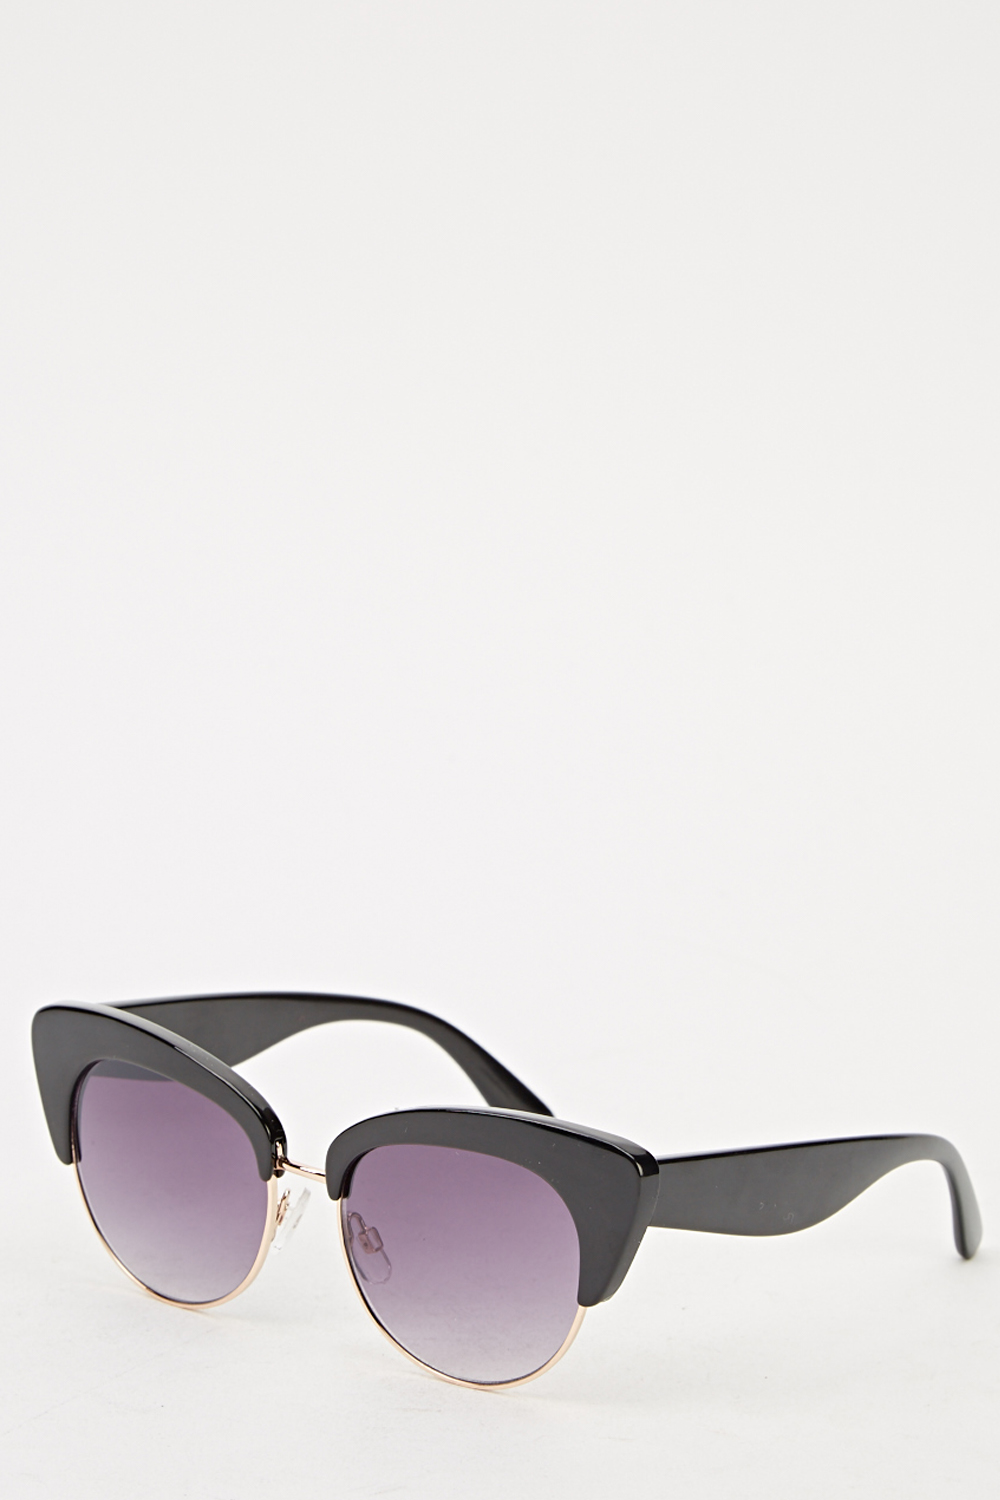 Mirrored Browline Sunglasses - Just $7